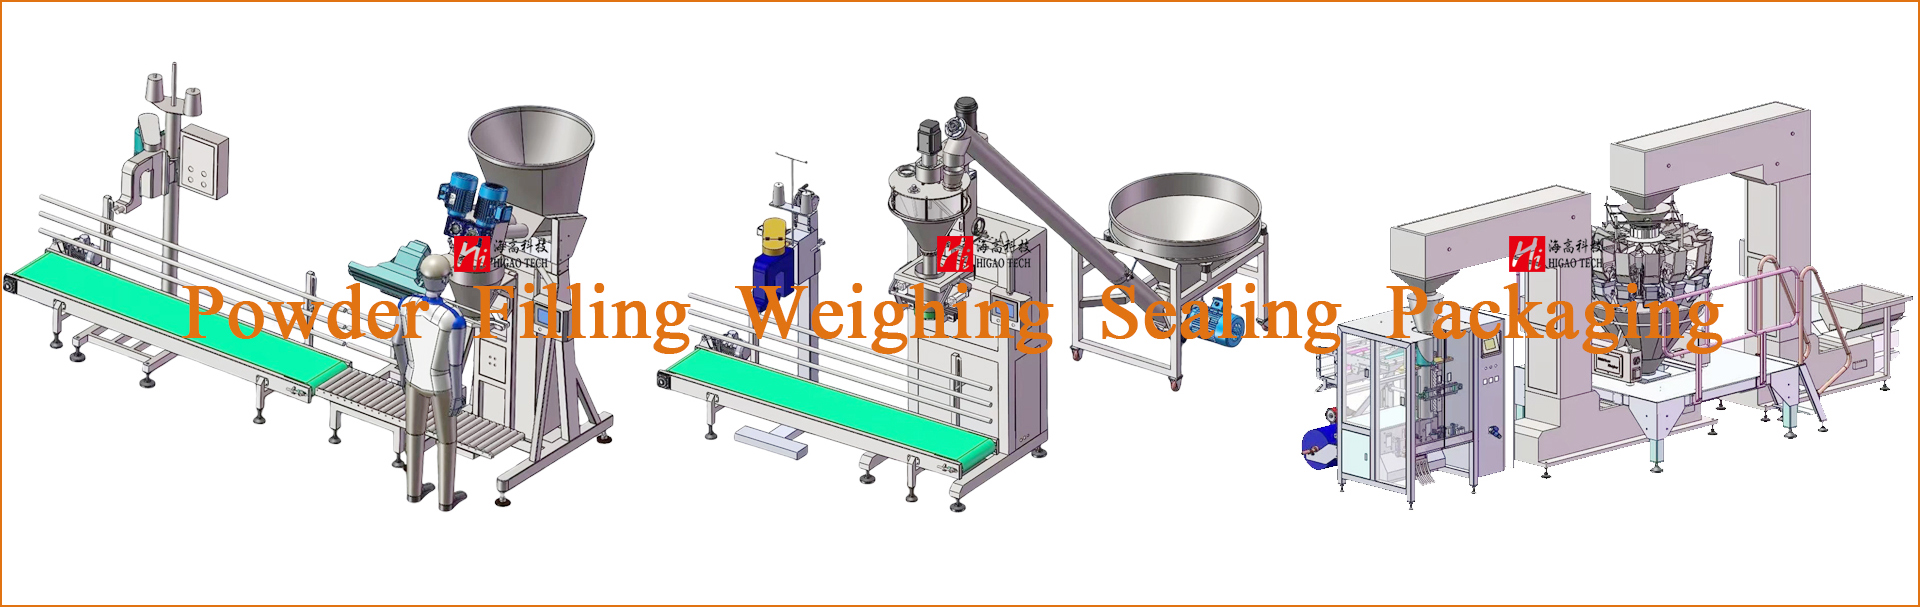 Powder Filling Weighing Sealing Packaging Machines Factory-Higao Tech